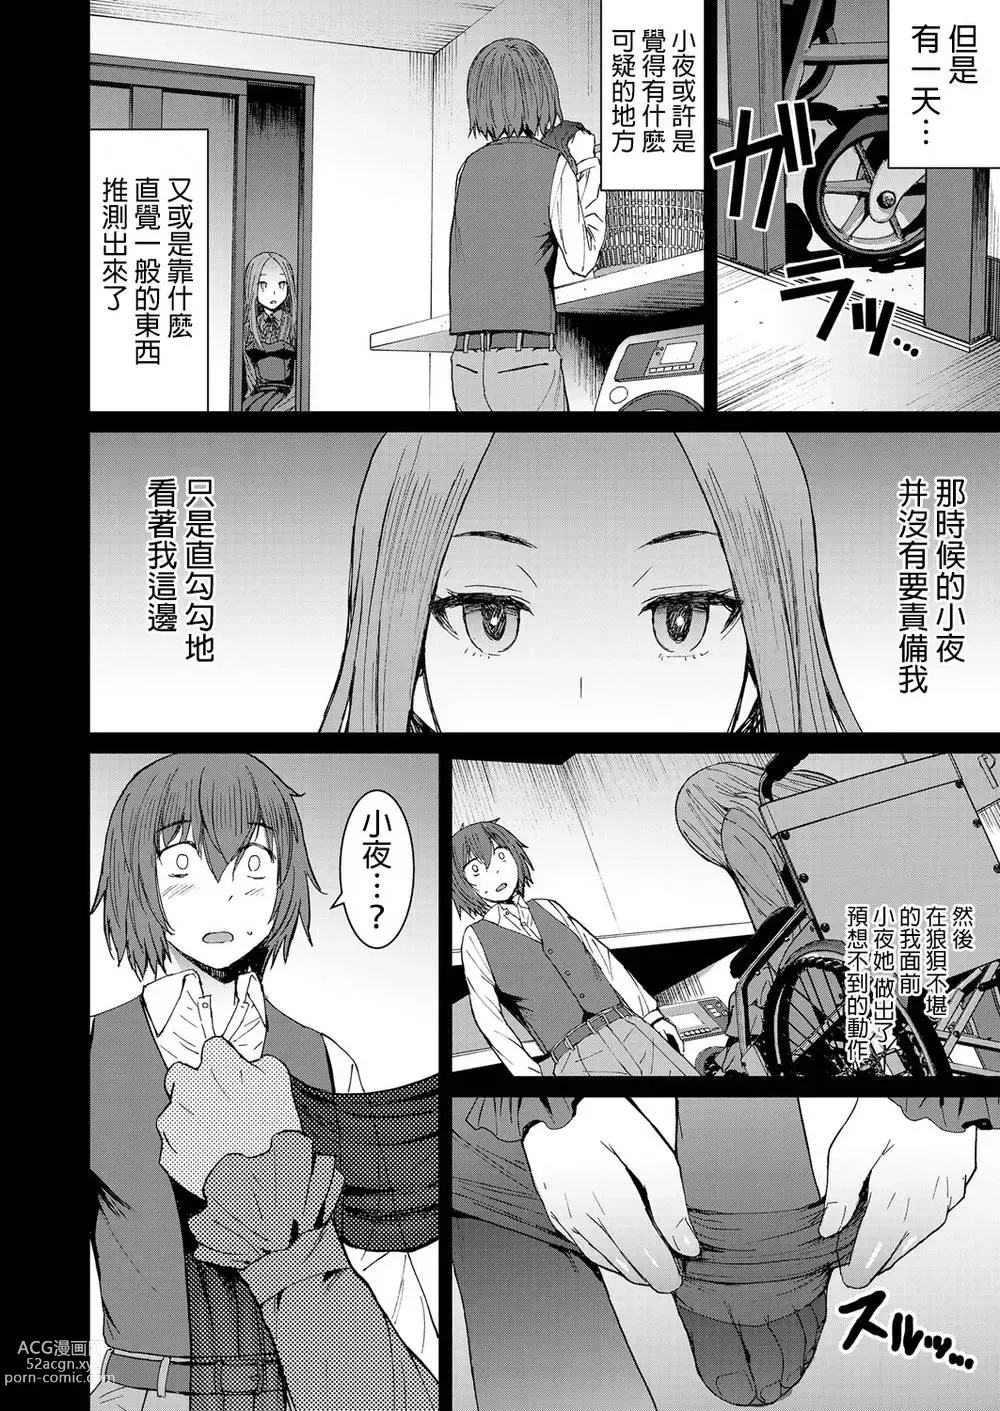 Page 10 of manga Aisarete Miru?